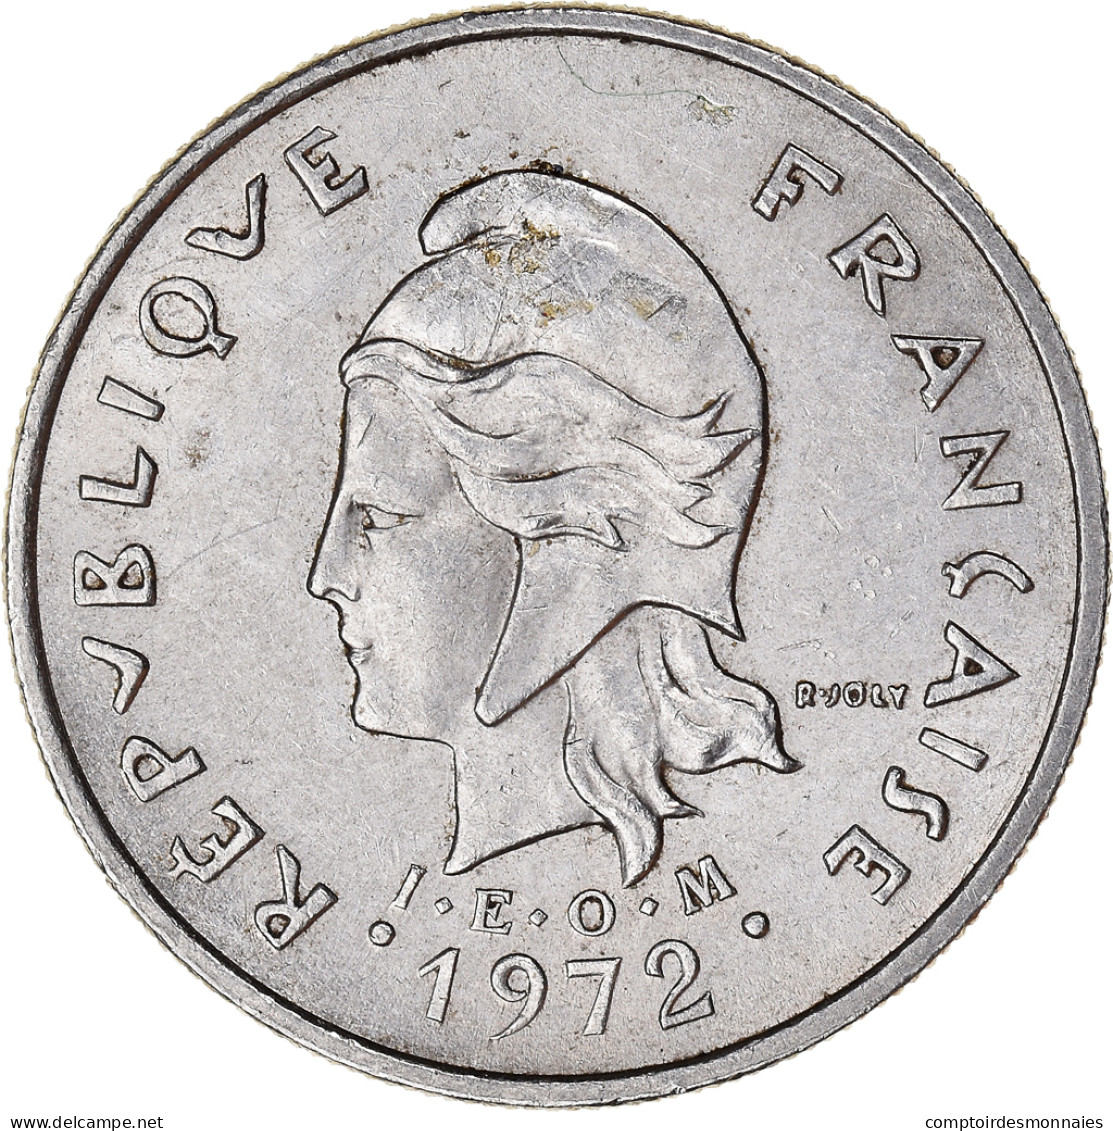 Monnaie, Polynésie Française, 10 Francs, 1972, Paris, TTB, Nickel, KM:8 - Elfenbeinküste